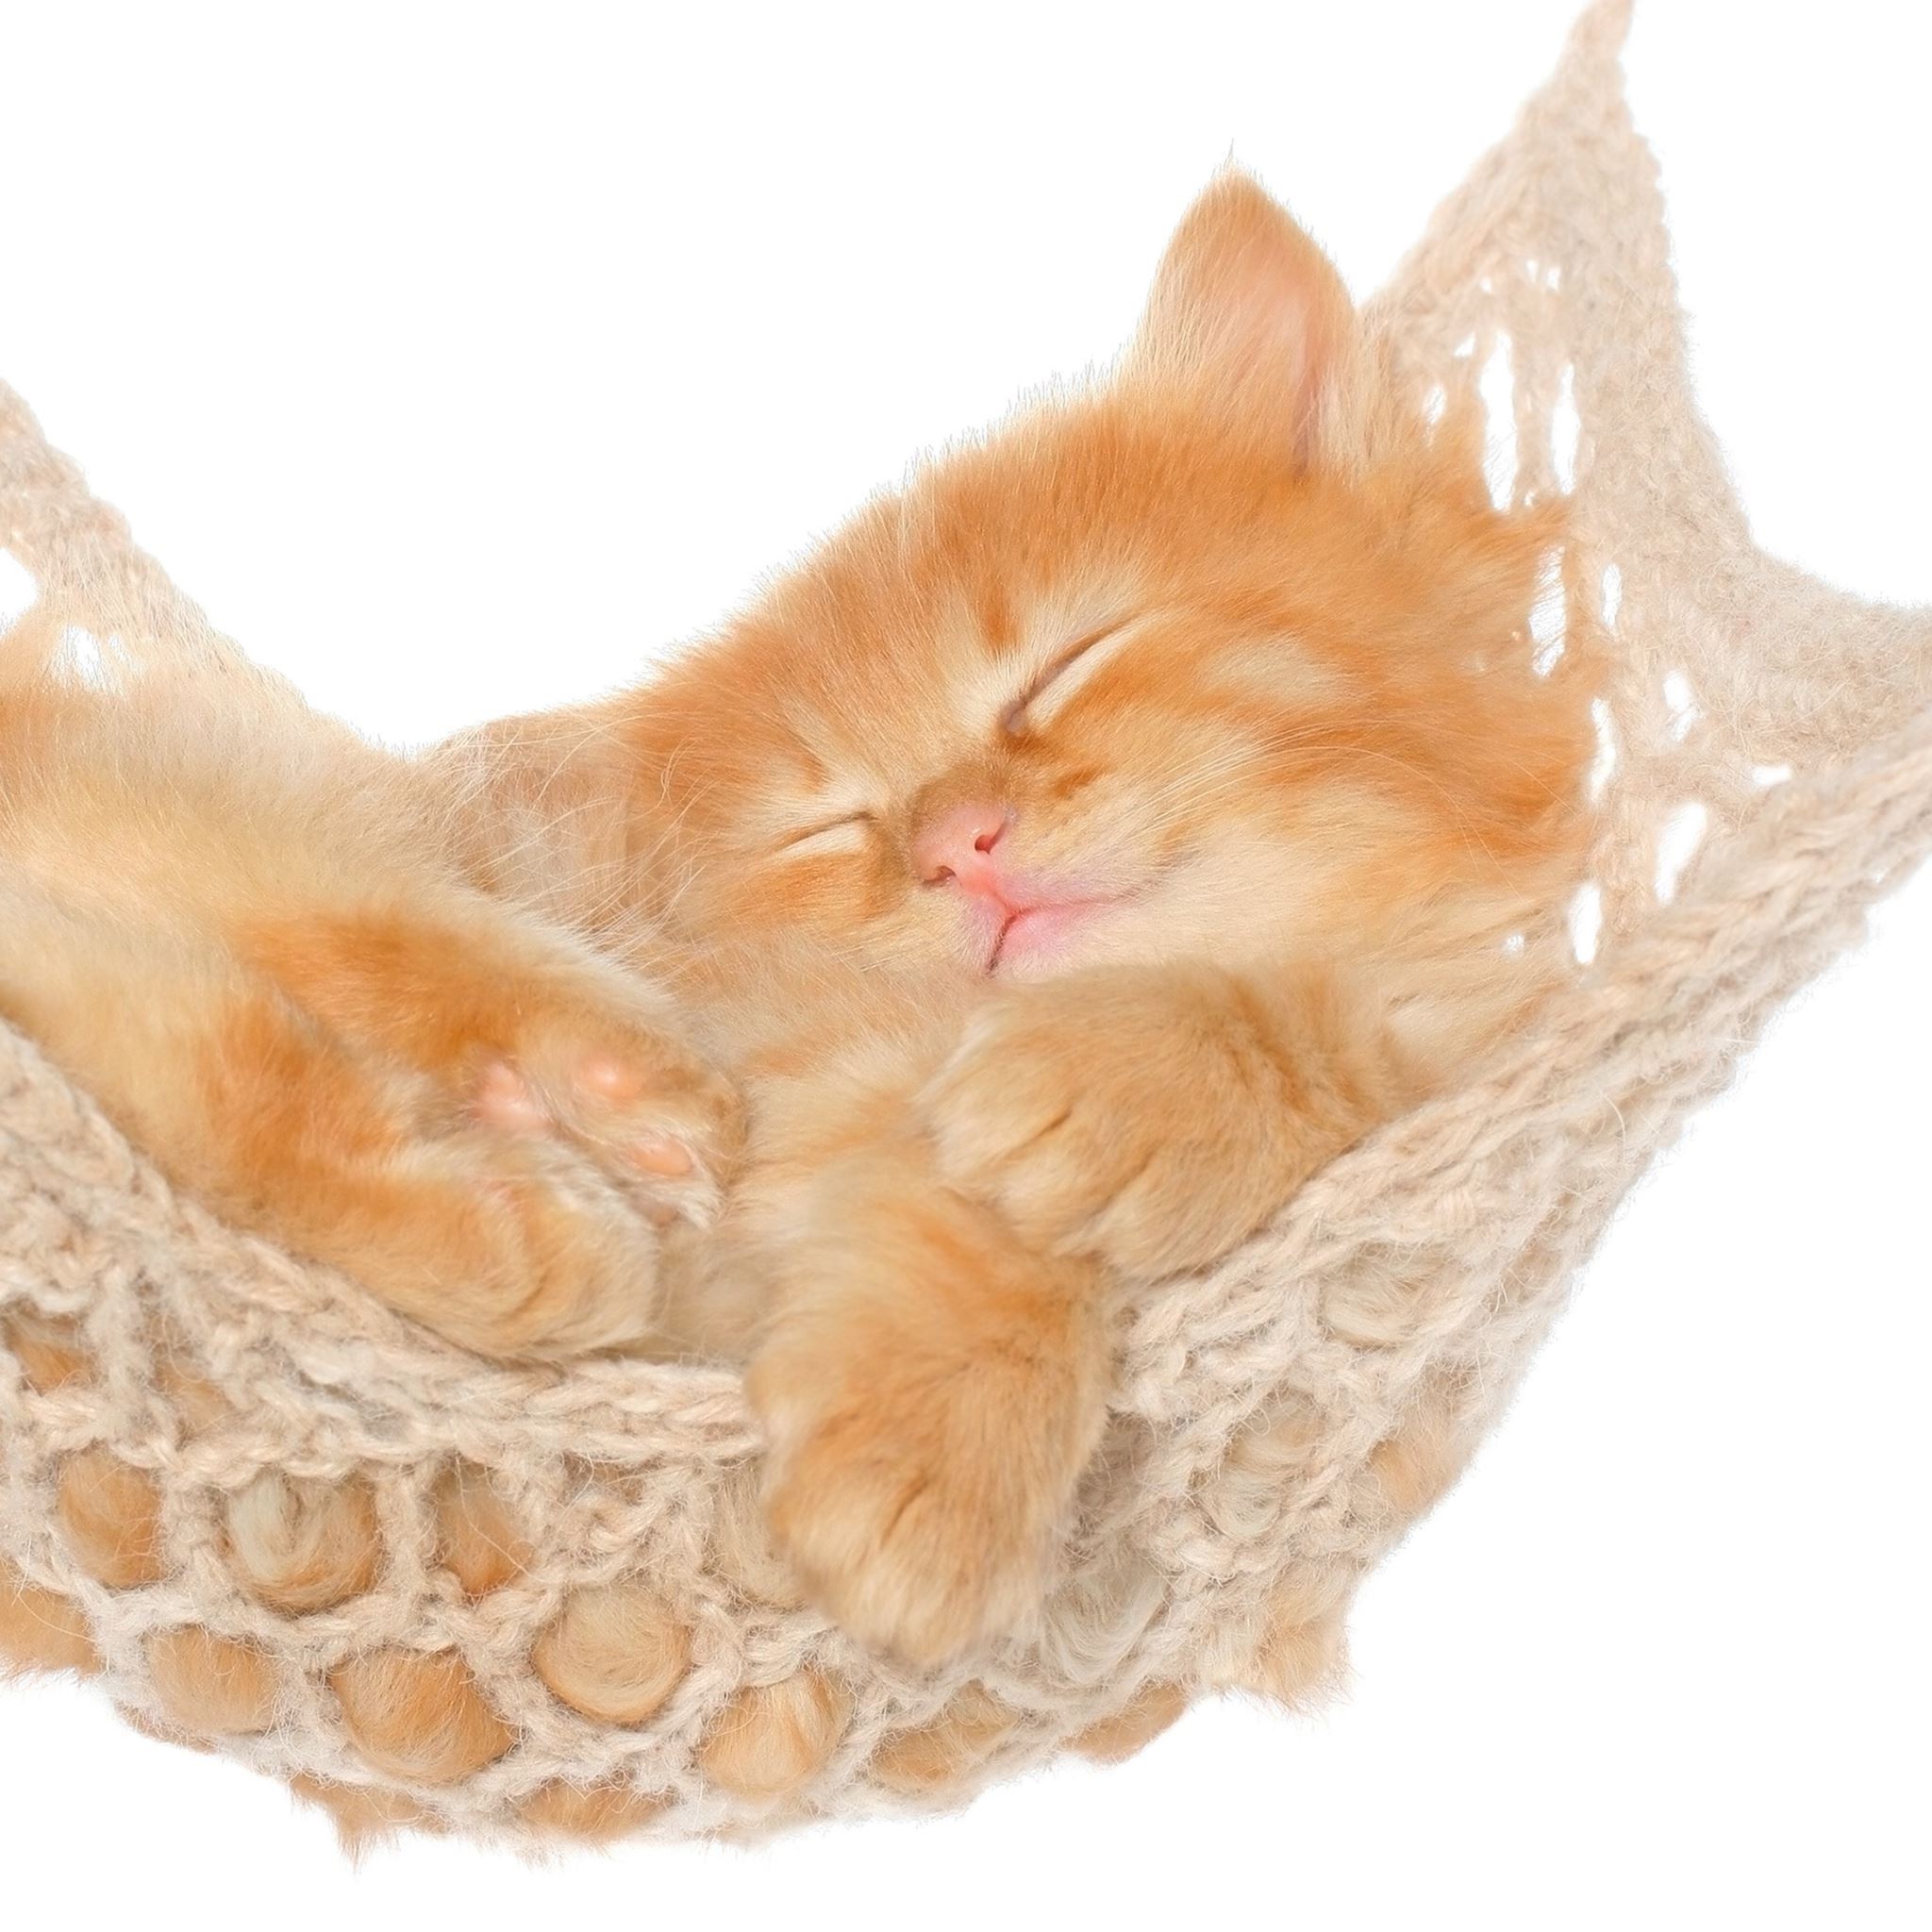 Cat Hammock Kitten Red Fluffy iPad Air Wallpaper Free Download